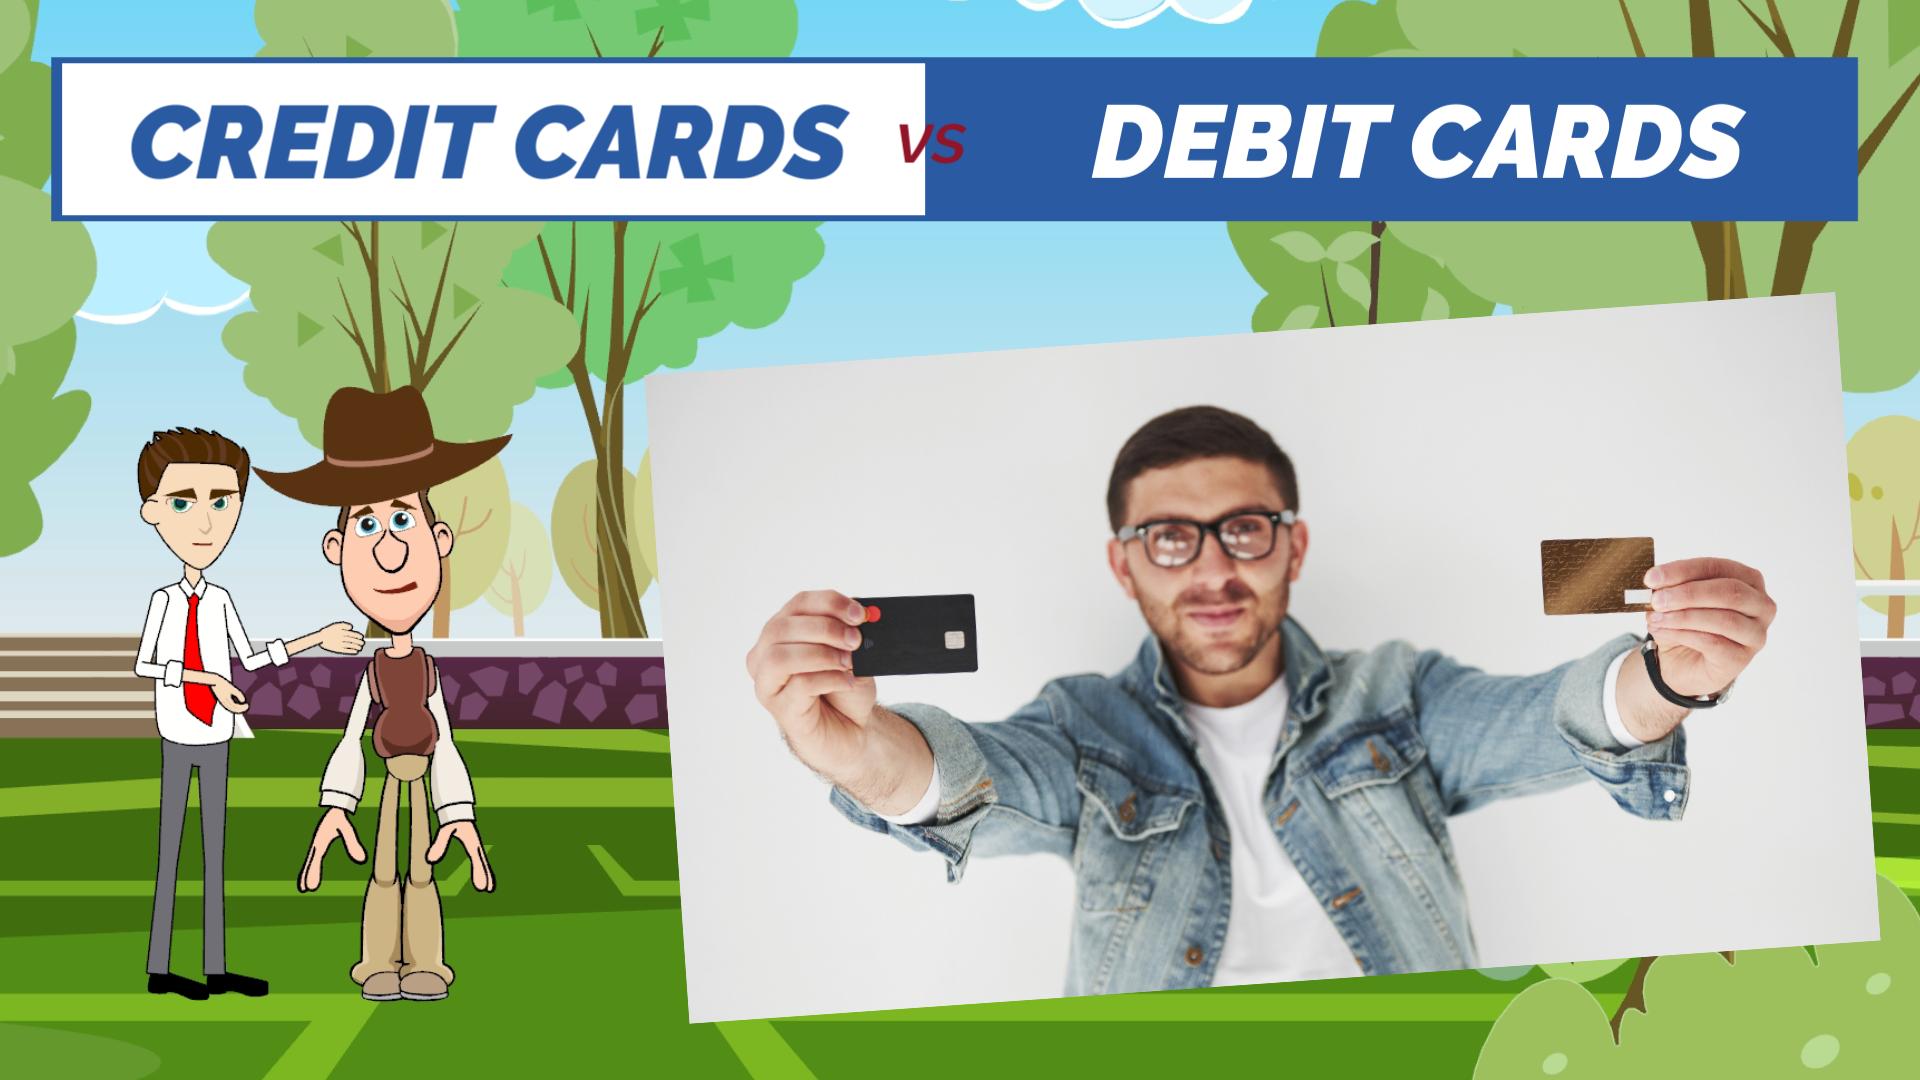 Credit cards vs debit cards